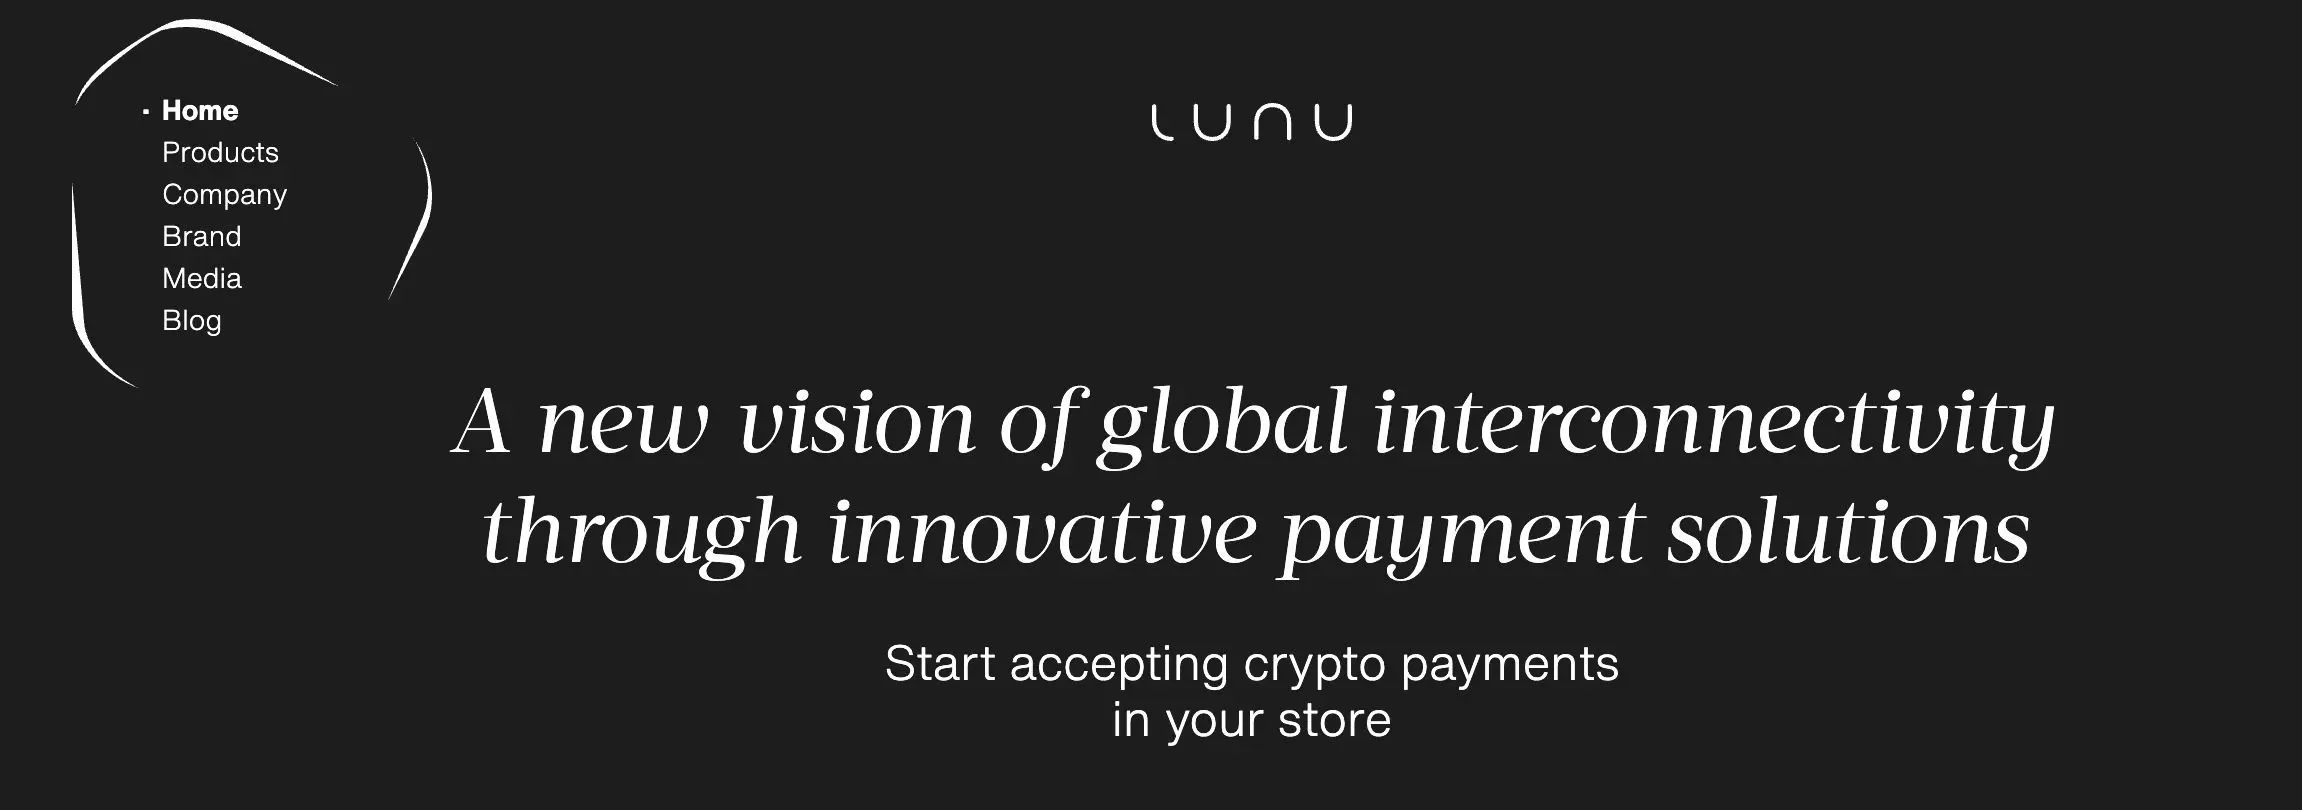 Lunu payment gateway